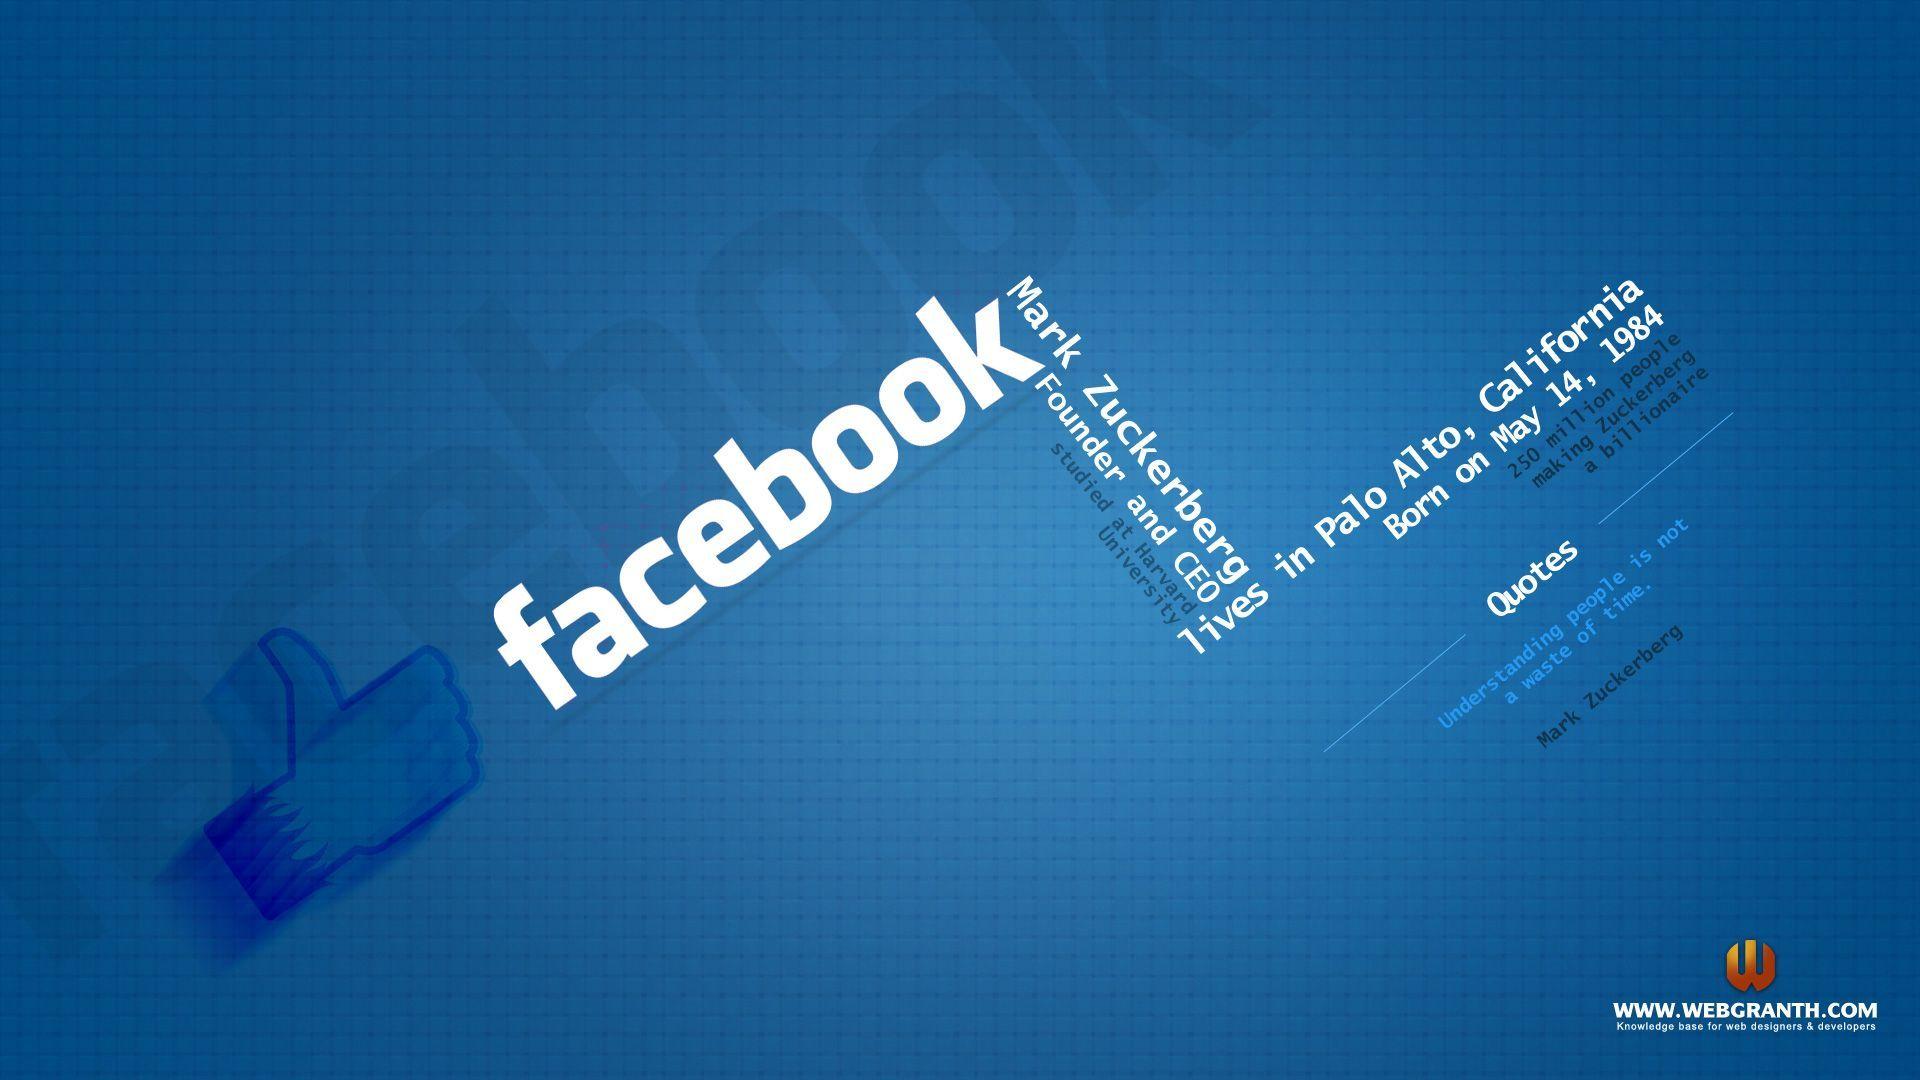 Facebook Wallpaper. Collection of Best Facebook Wallpaper 2012